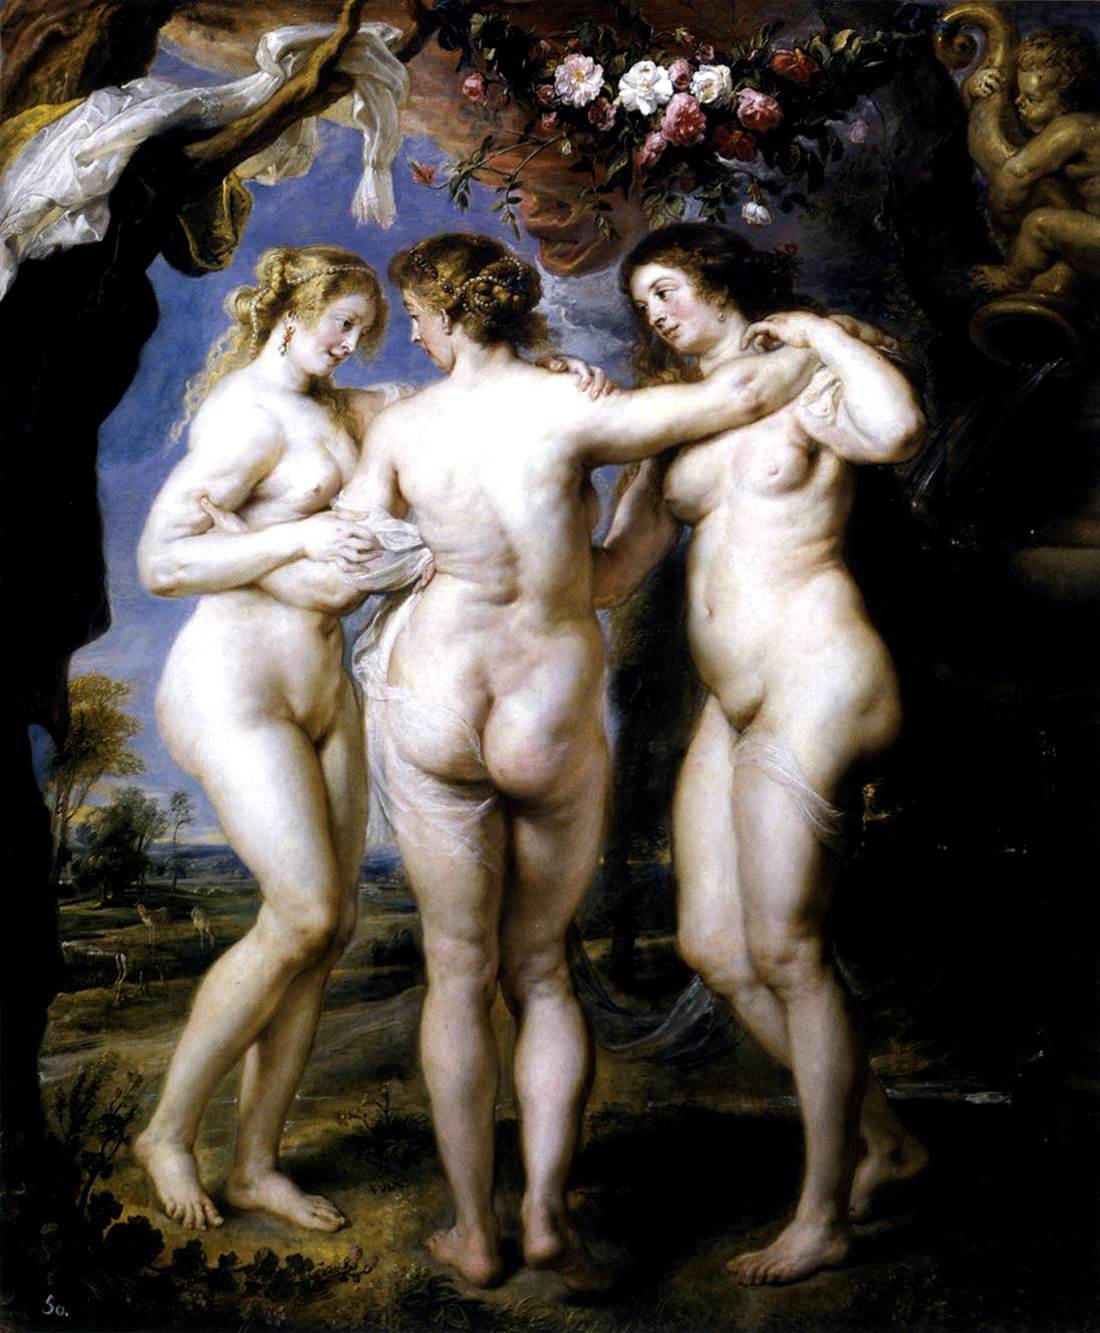 Peter Paul Rubens 